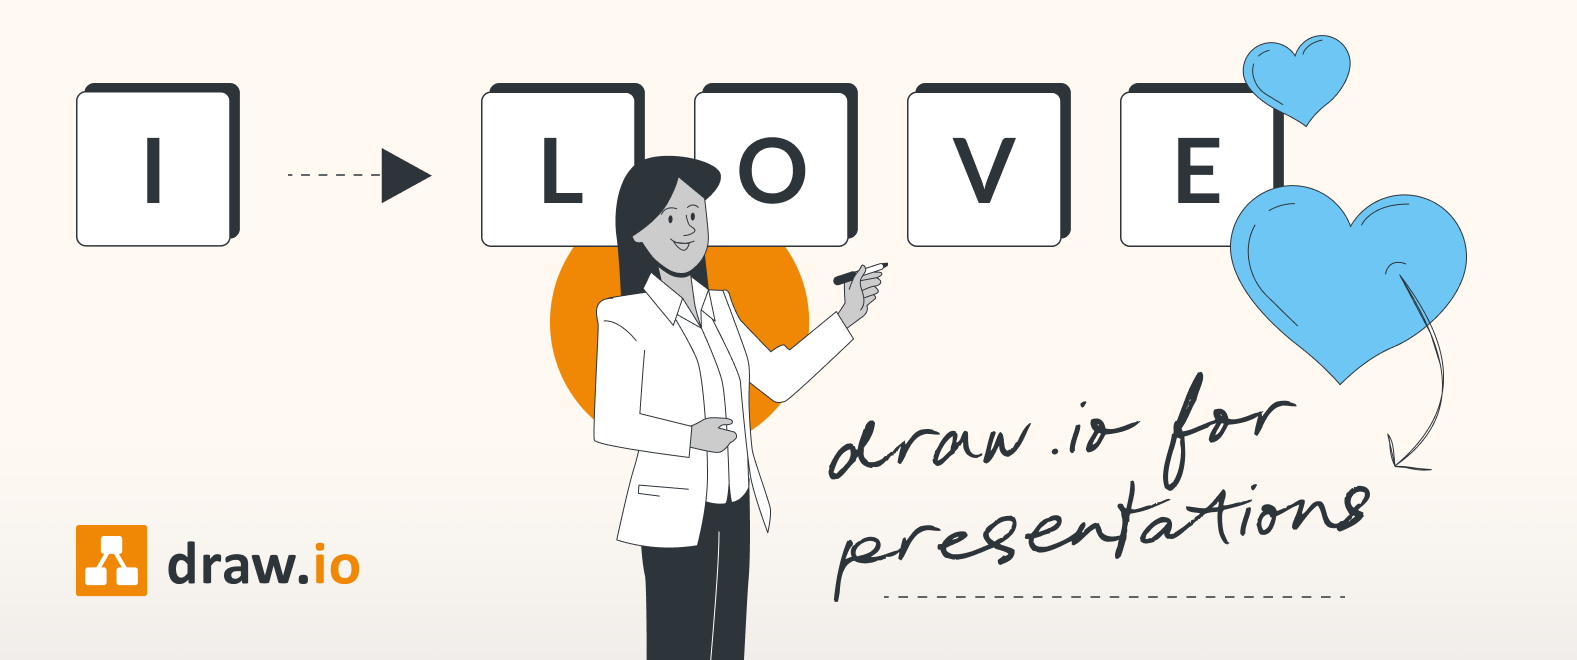 Use draw.io for presentations